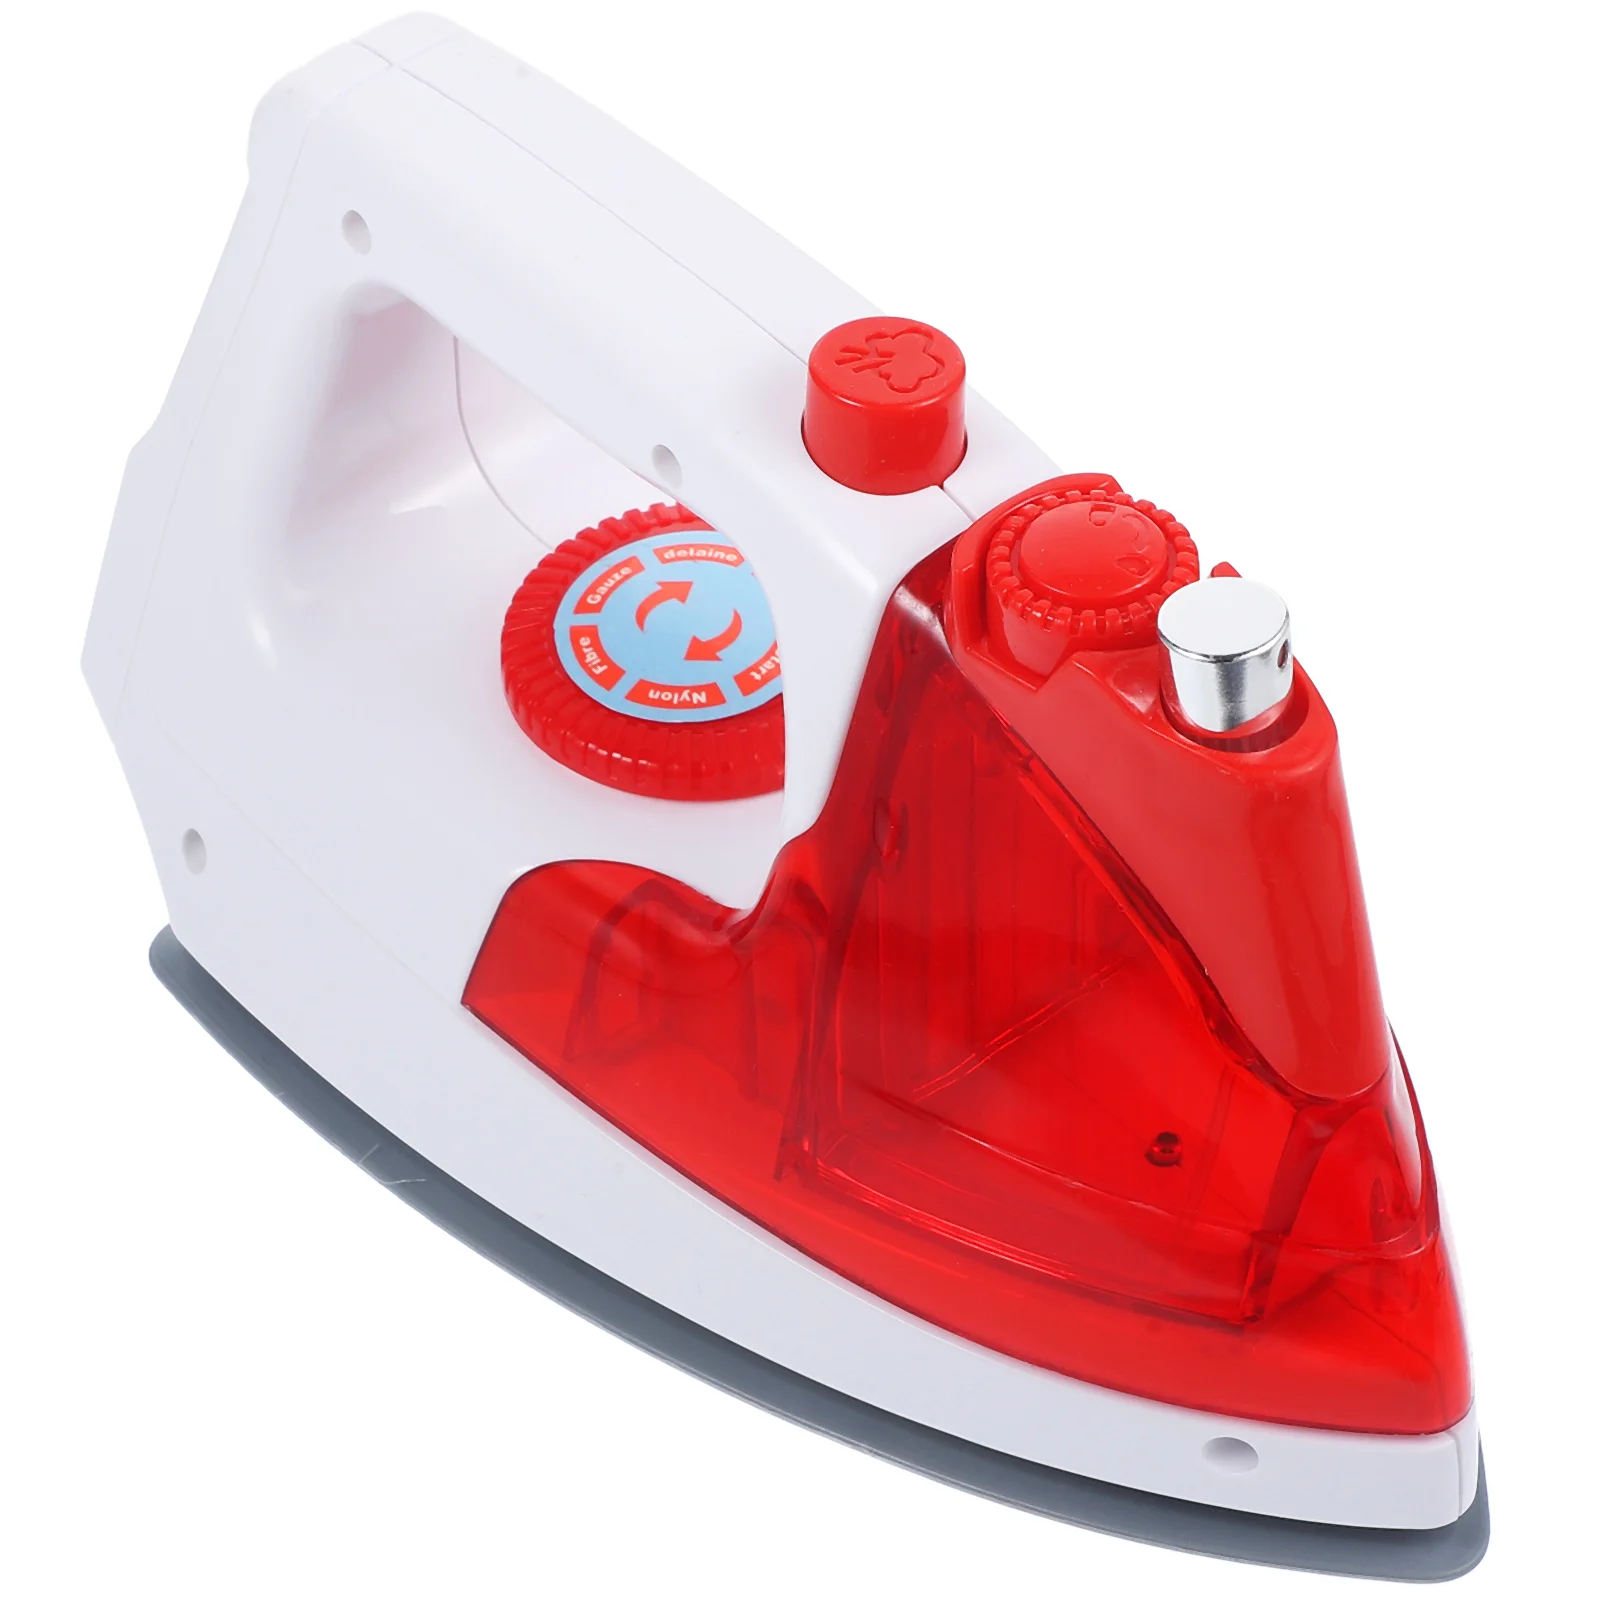 

Children's Pretend Play Toys Simulation Blender Children Toaster Vacuum Cleaner Cooker Educational Kitchen Toys For Girls